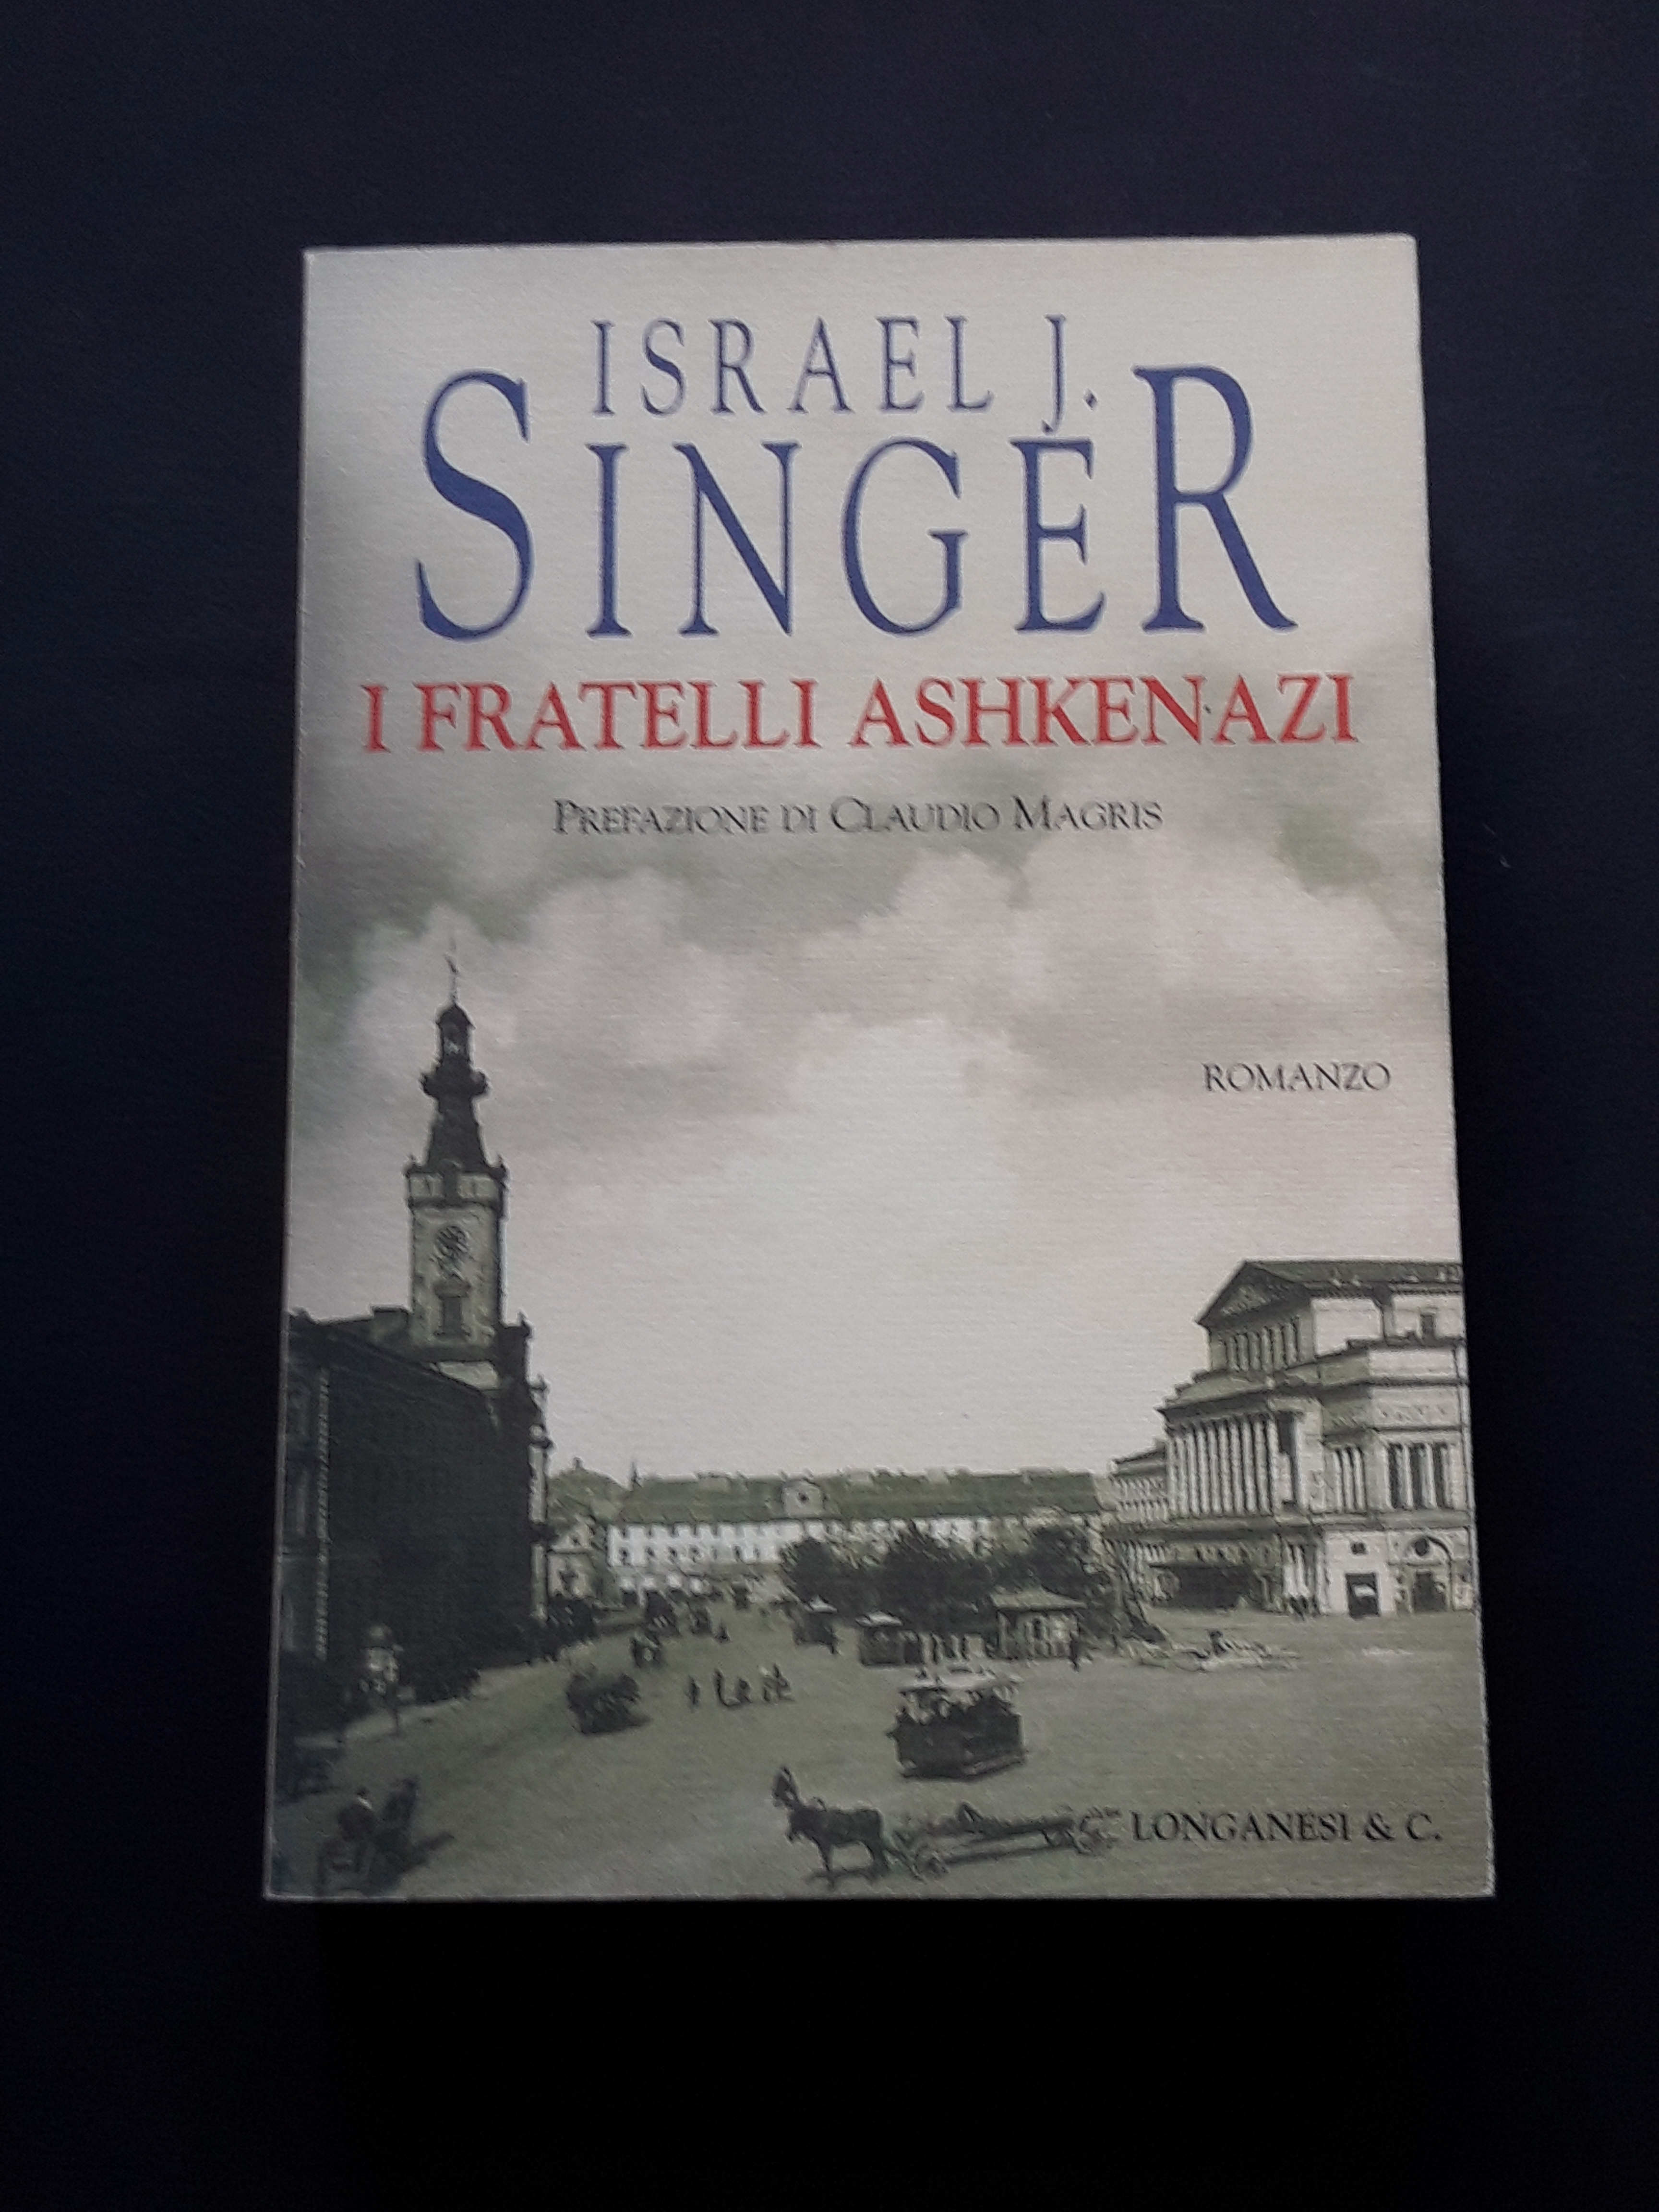 Singer Israel J., I fratelli Ashkenazi, Longanesi, 1970 - I - Singer Israel J.